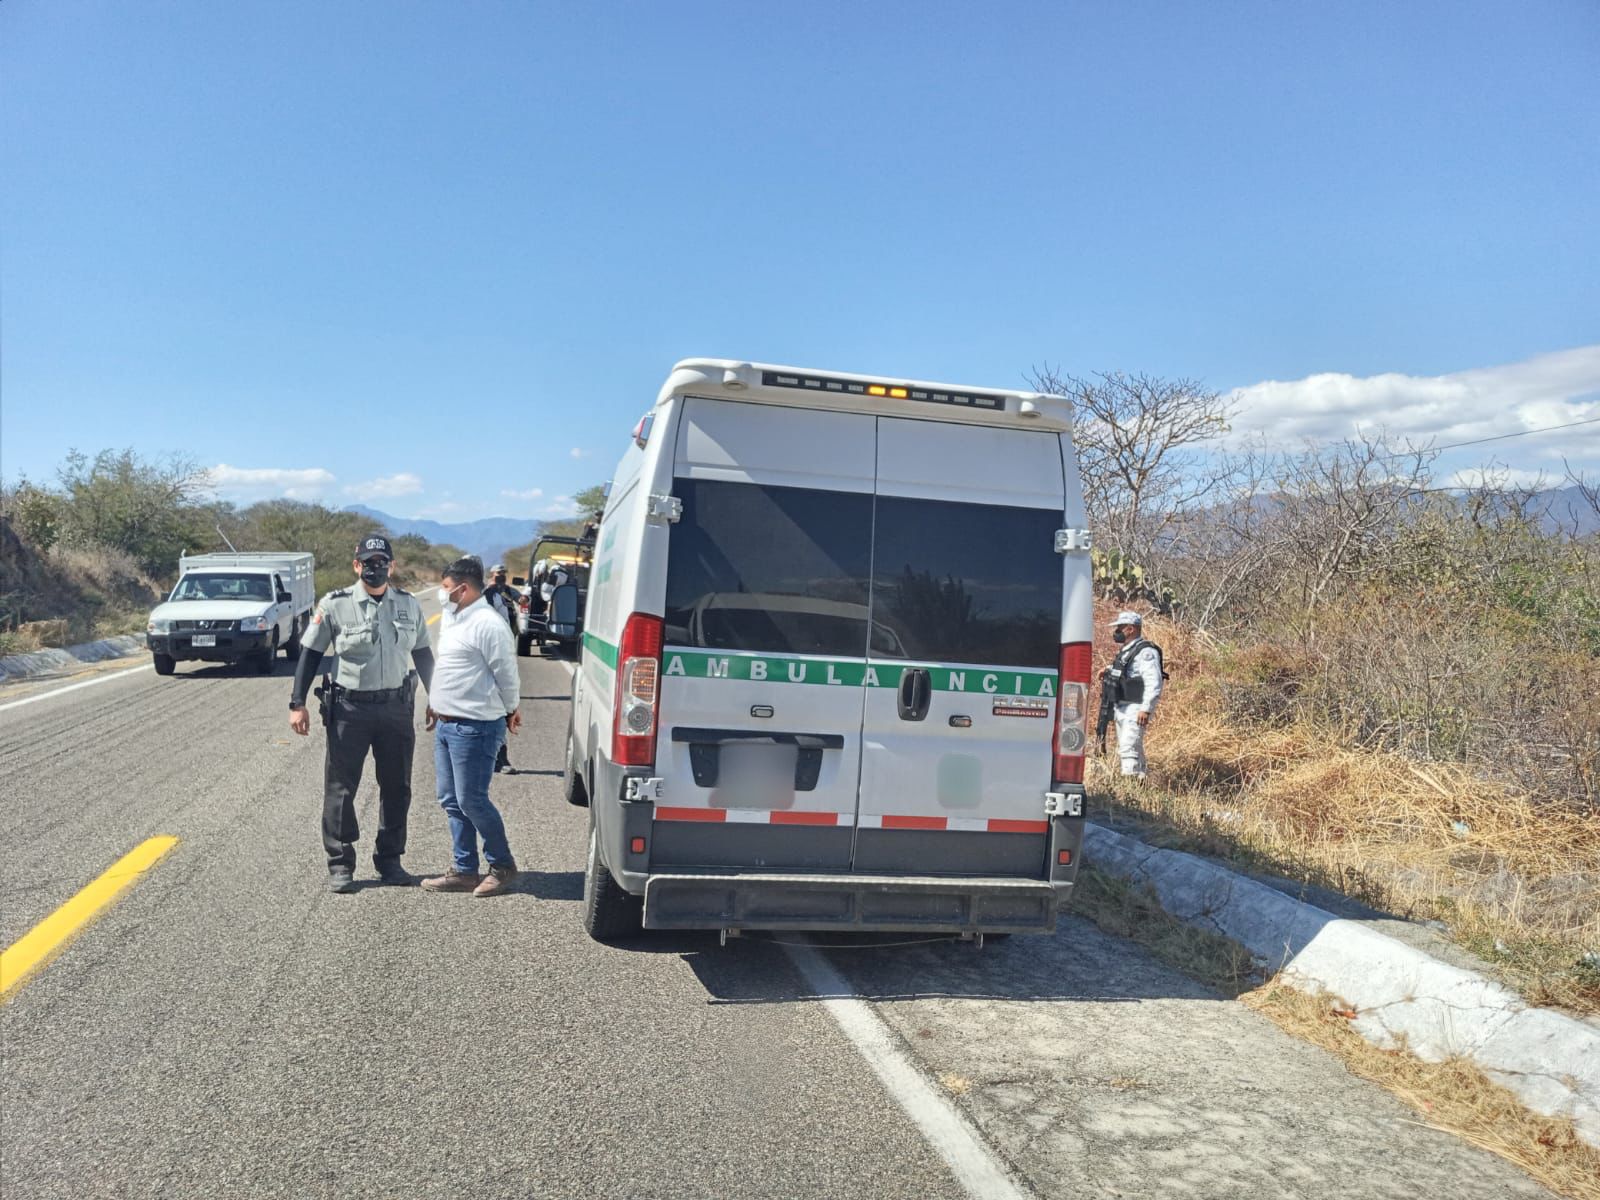 Hallan a 28 nicaragüenses hacinados en ambulancia pirata en Oaxaca